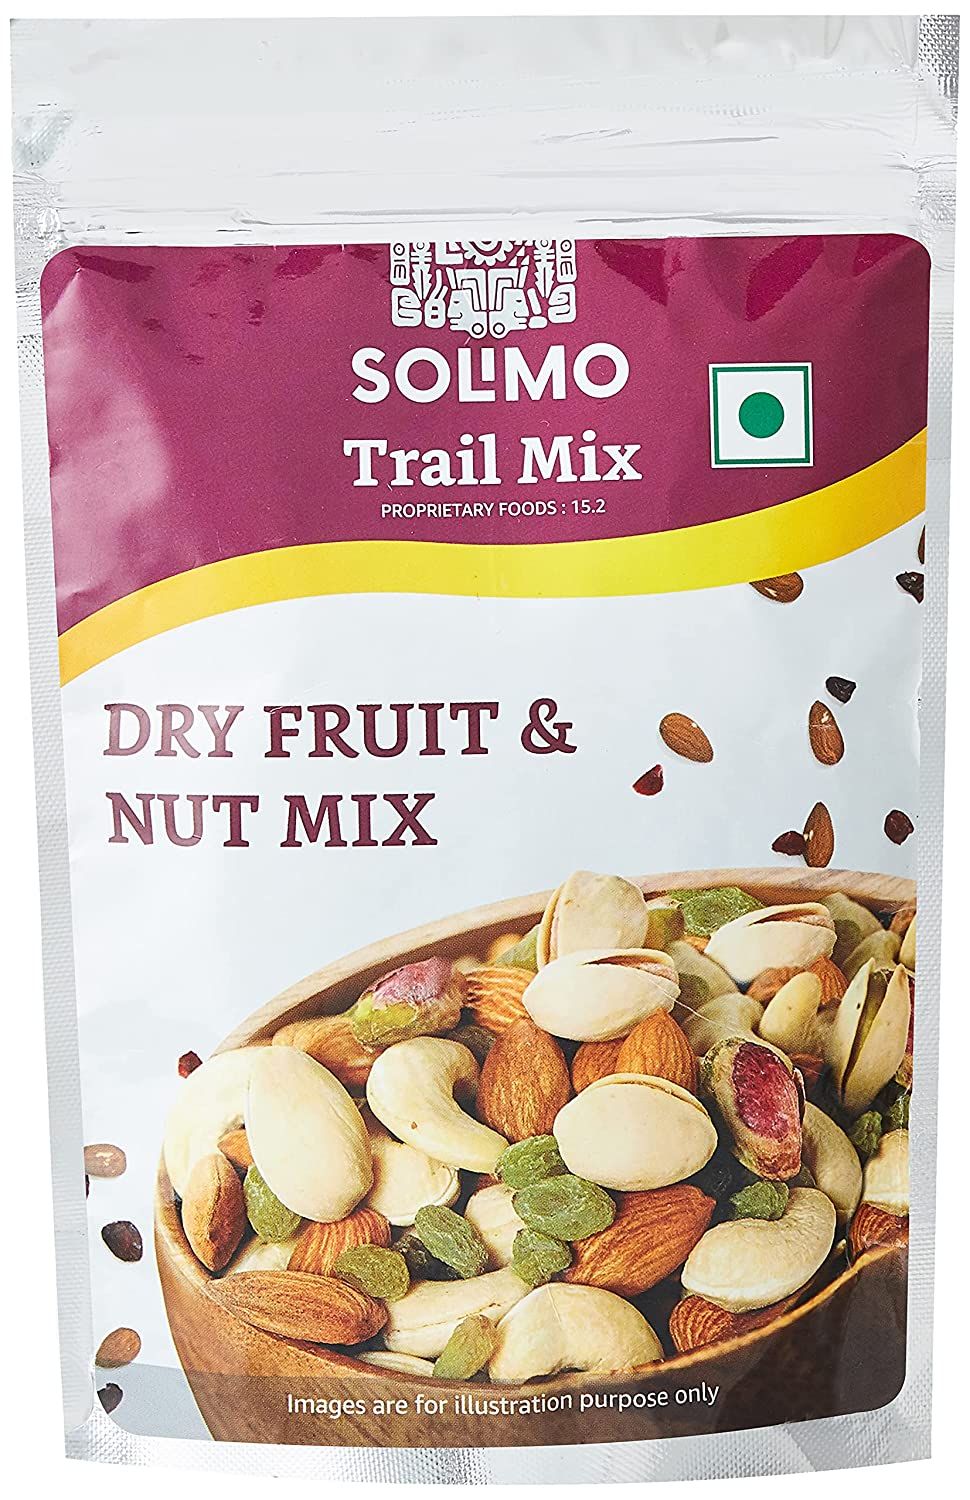 Solimo Dry Fruit & Nut Mix Image